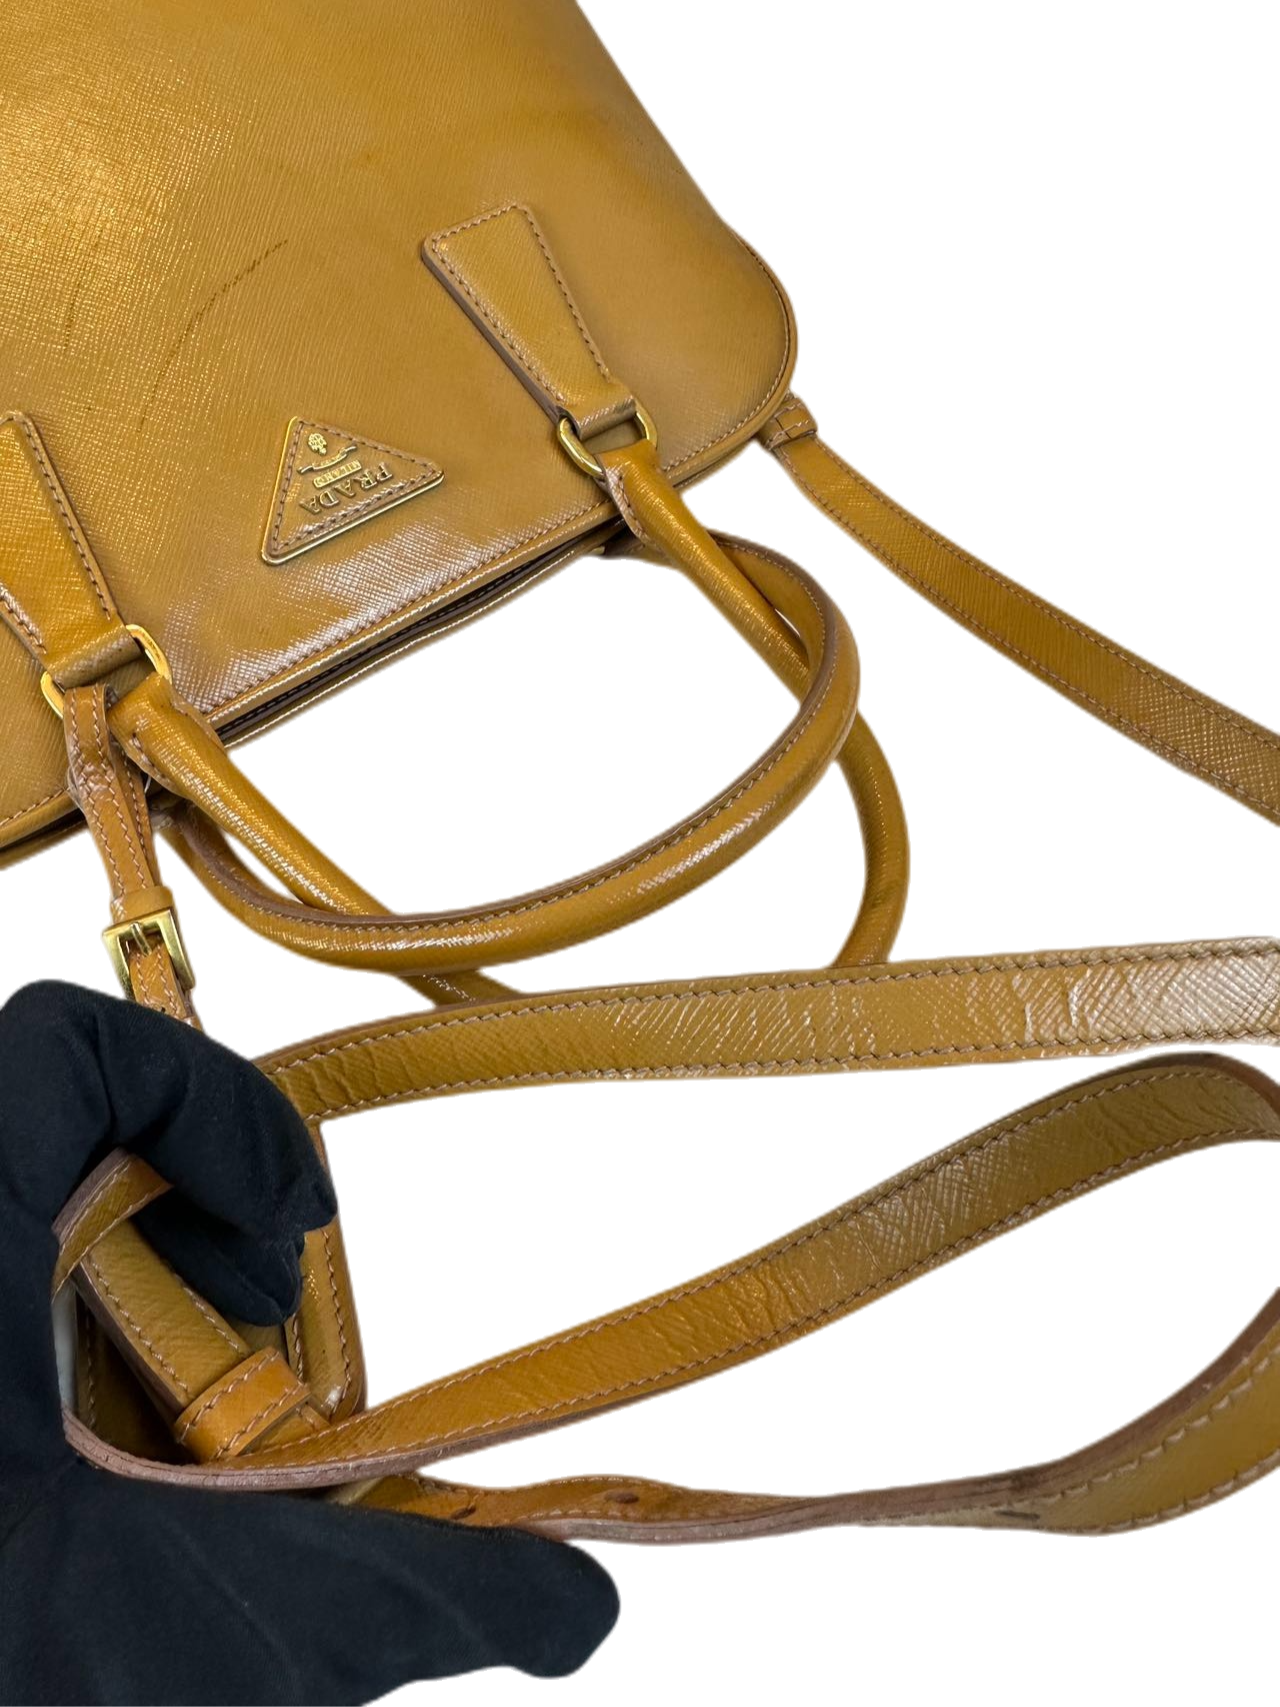 Preloved Prada Patent Leather Shoulder Bag Crossbody